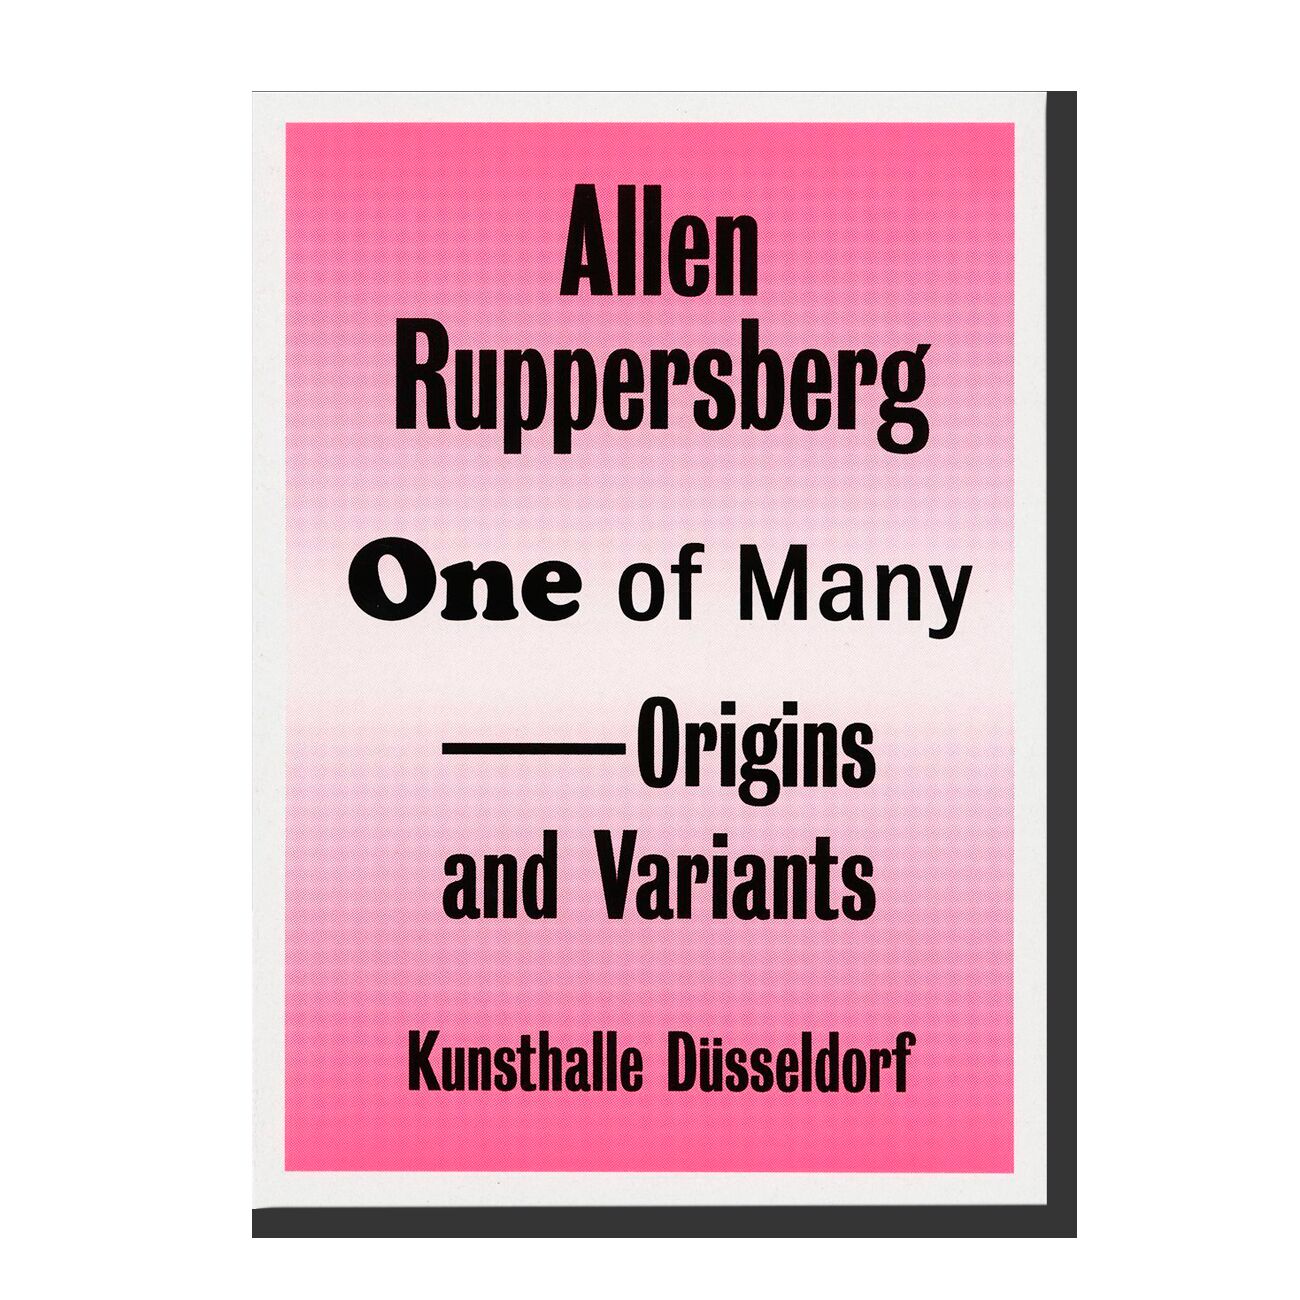 Allen Ruppersberg: One of Many